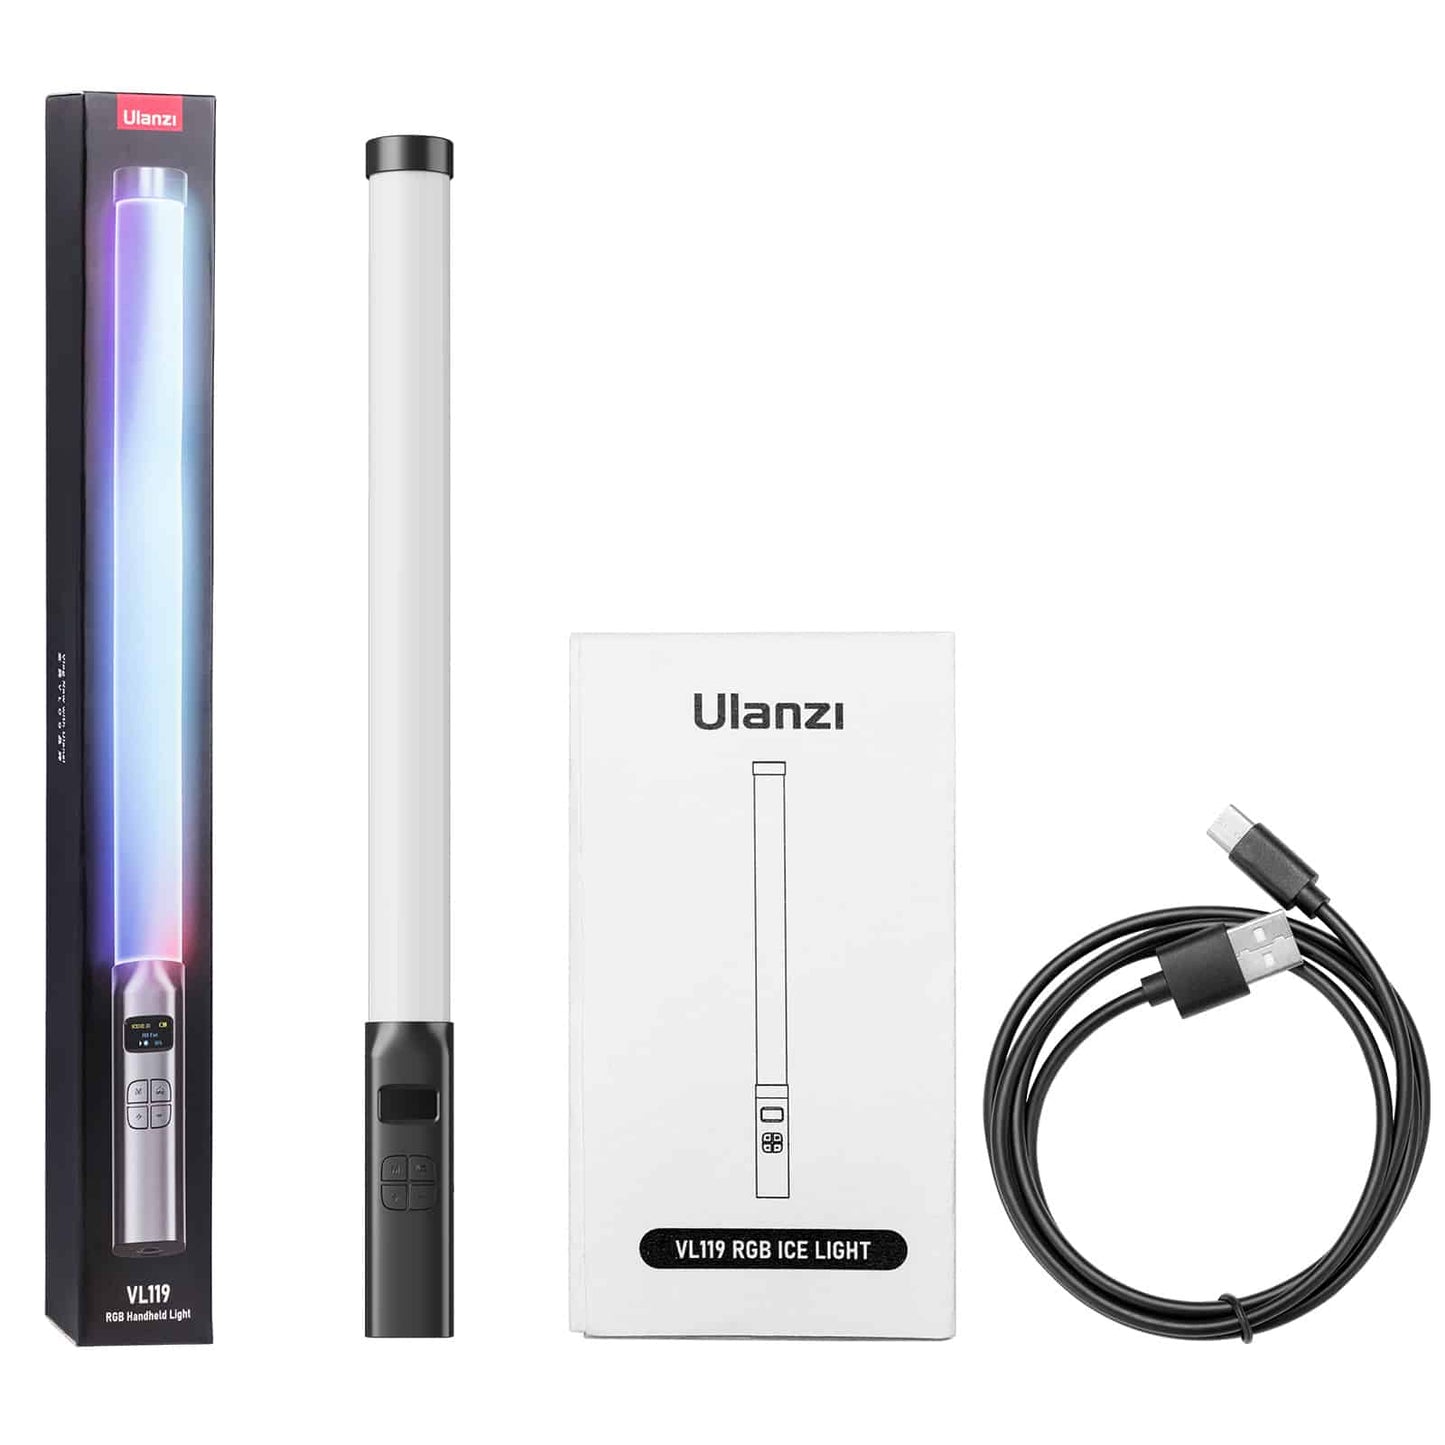 Ulanzi VL119 RGB Tube Light XL with handle